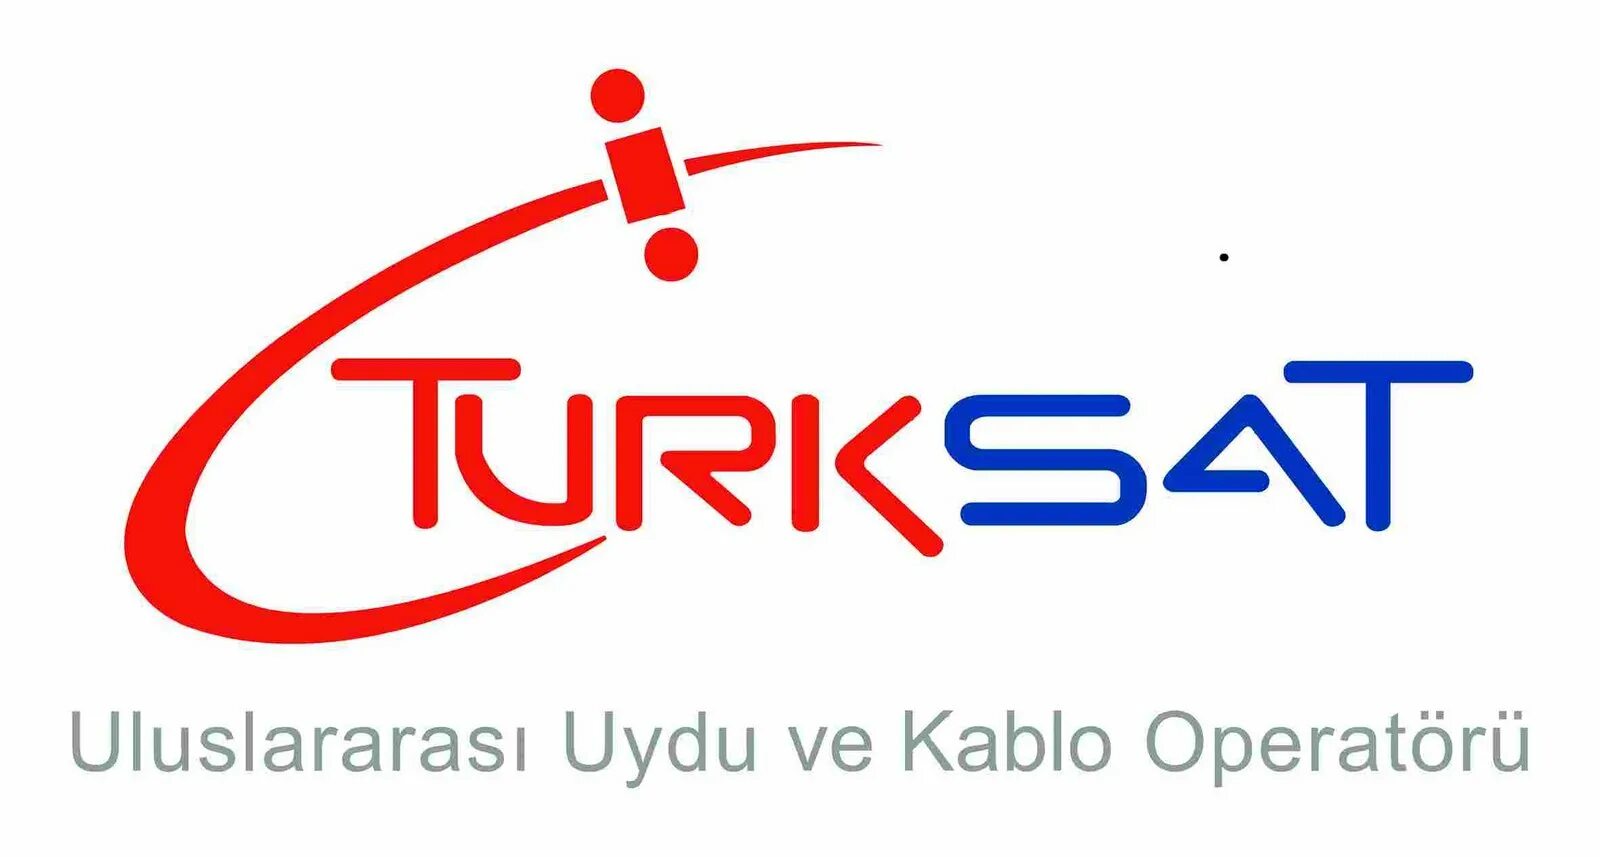 Turksat logo. Спутник Türksat 6a. Турция со спутника. Турксат в Шуе.